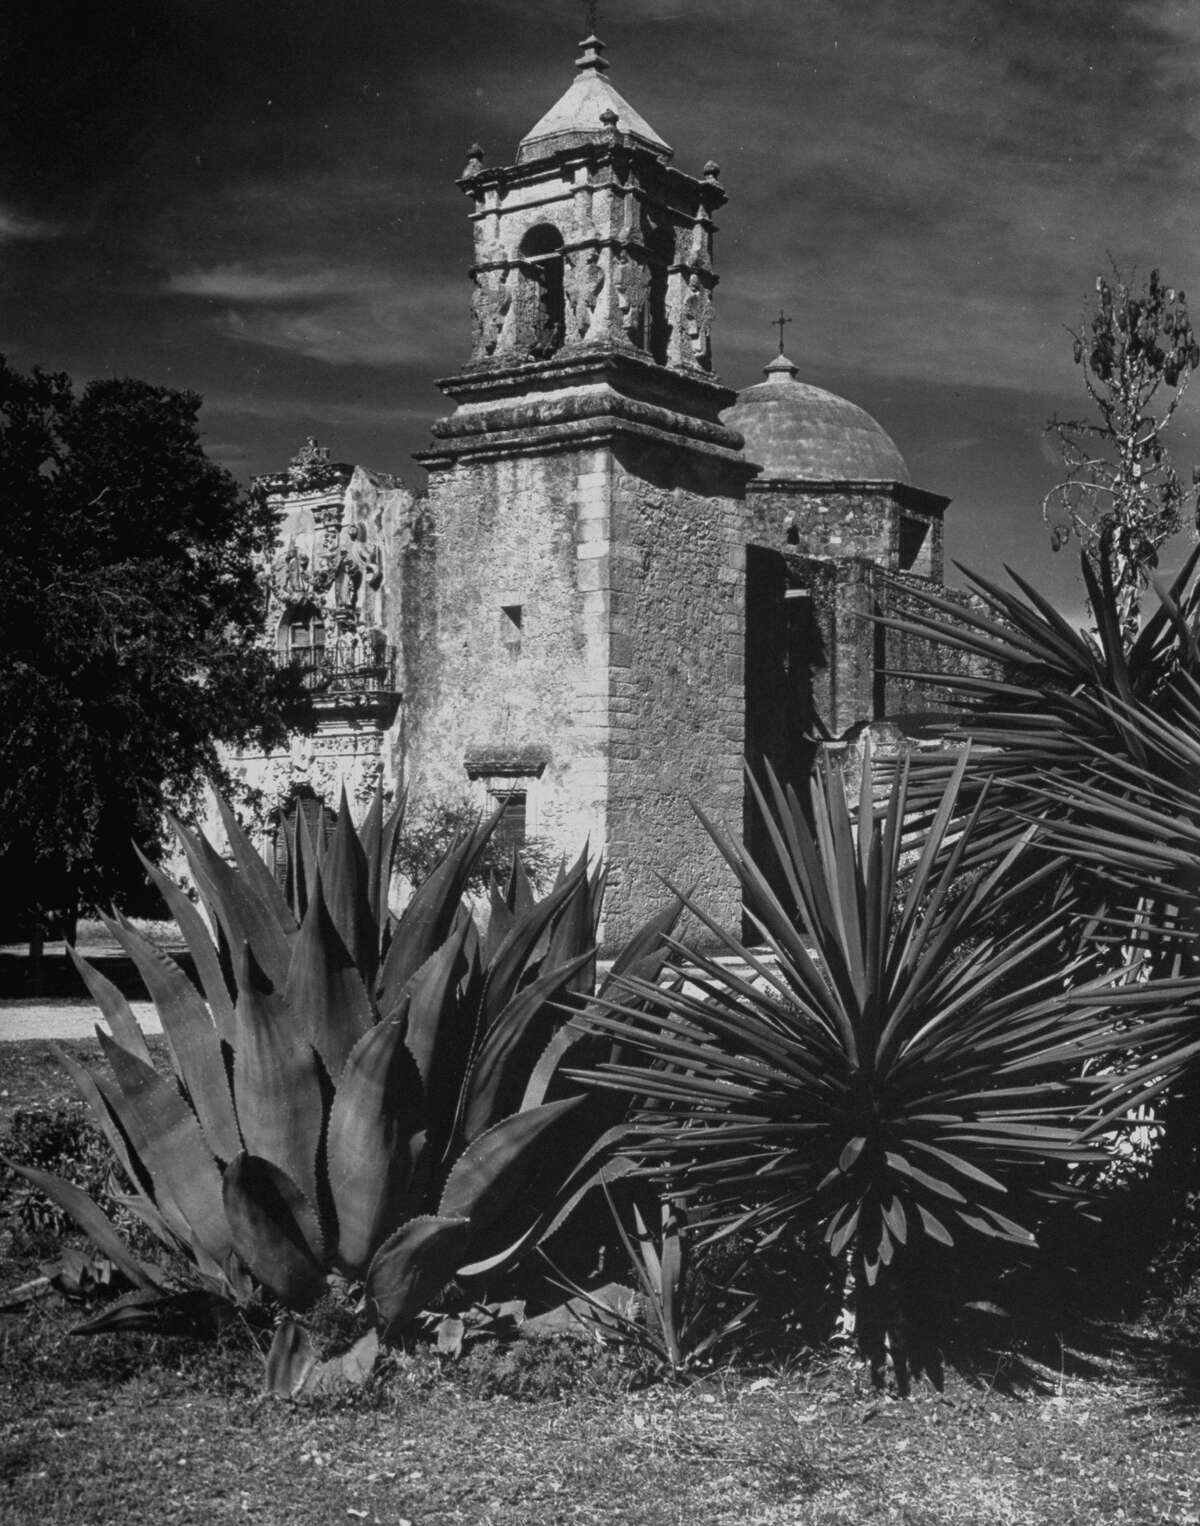 Cactus growing around Mission San José on Dec. 31, 1944.